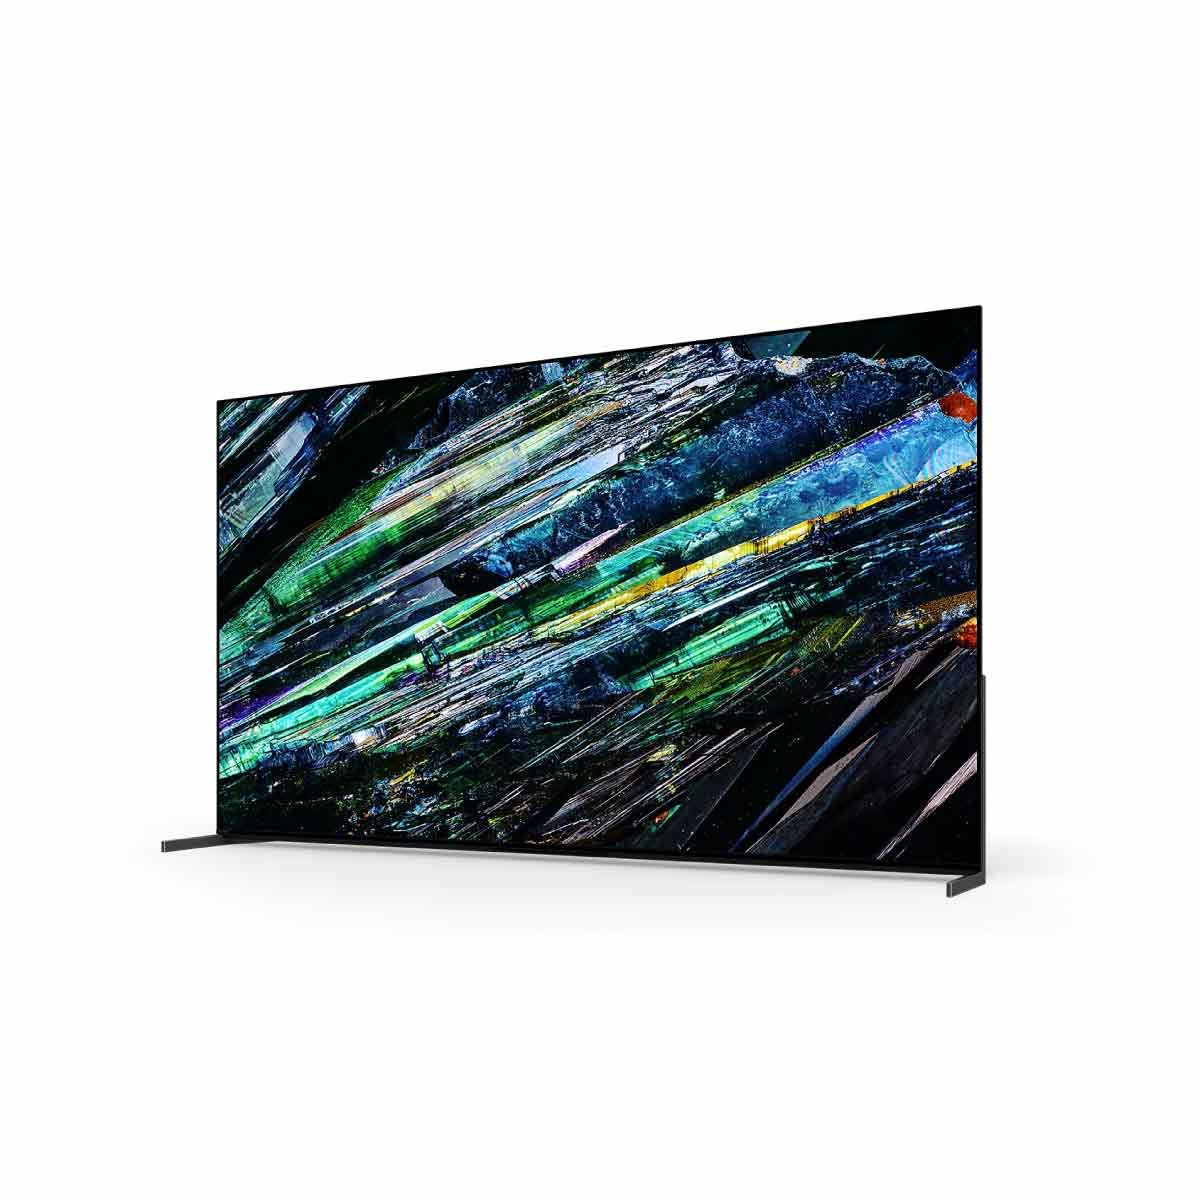 SONY Bravia QD OLED Google TV 4K รุ่น XR-77A95L QD OLED TV สมาร์ททีวี 77 นิ้ว Series A95L